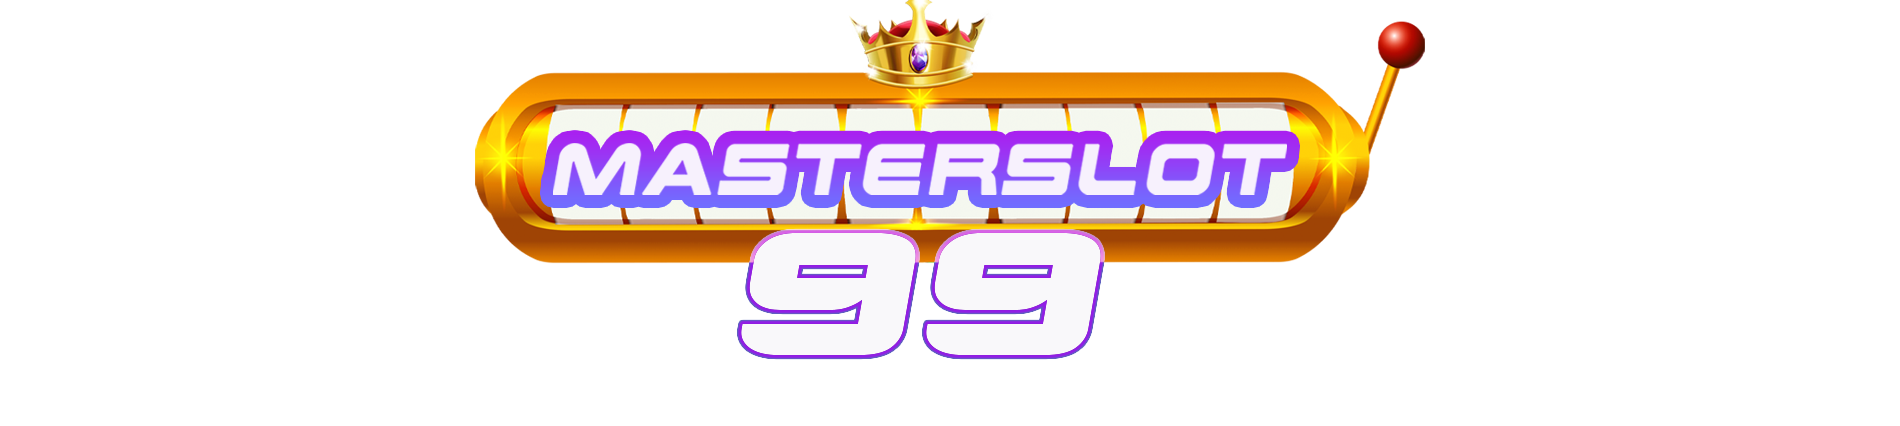 MASTERSLOT99 - Agen Situs Judi Slot Online MASTERSLOT99